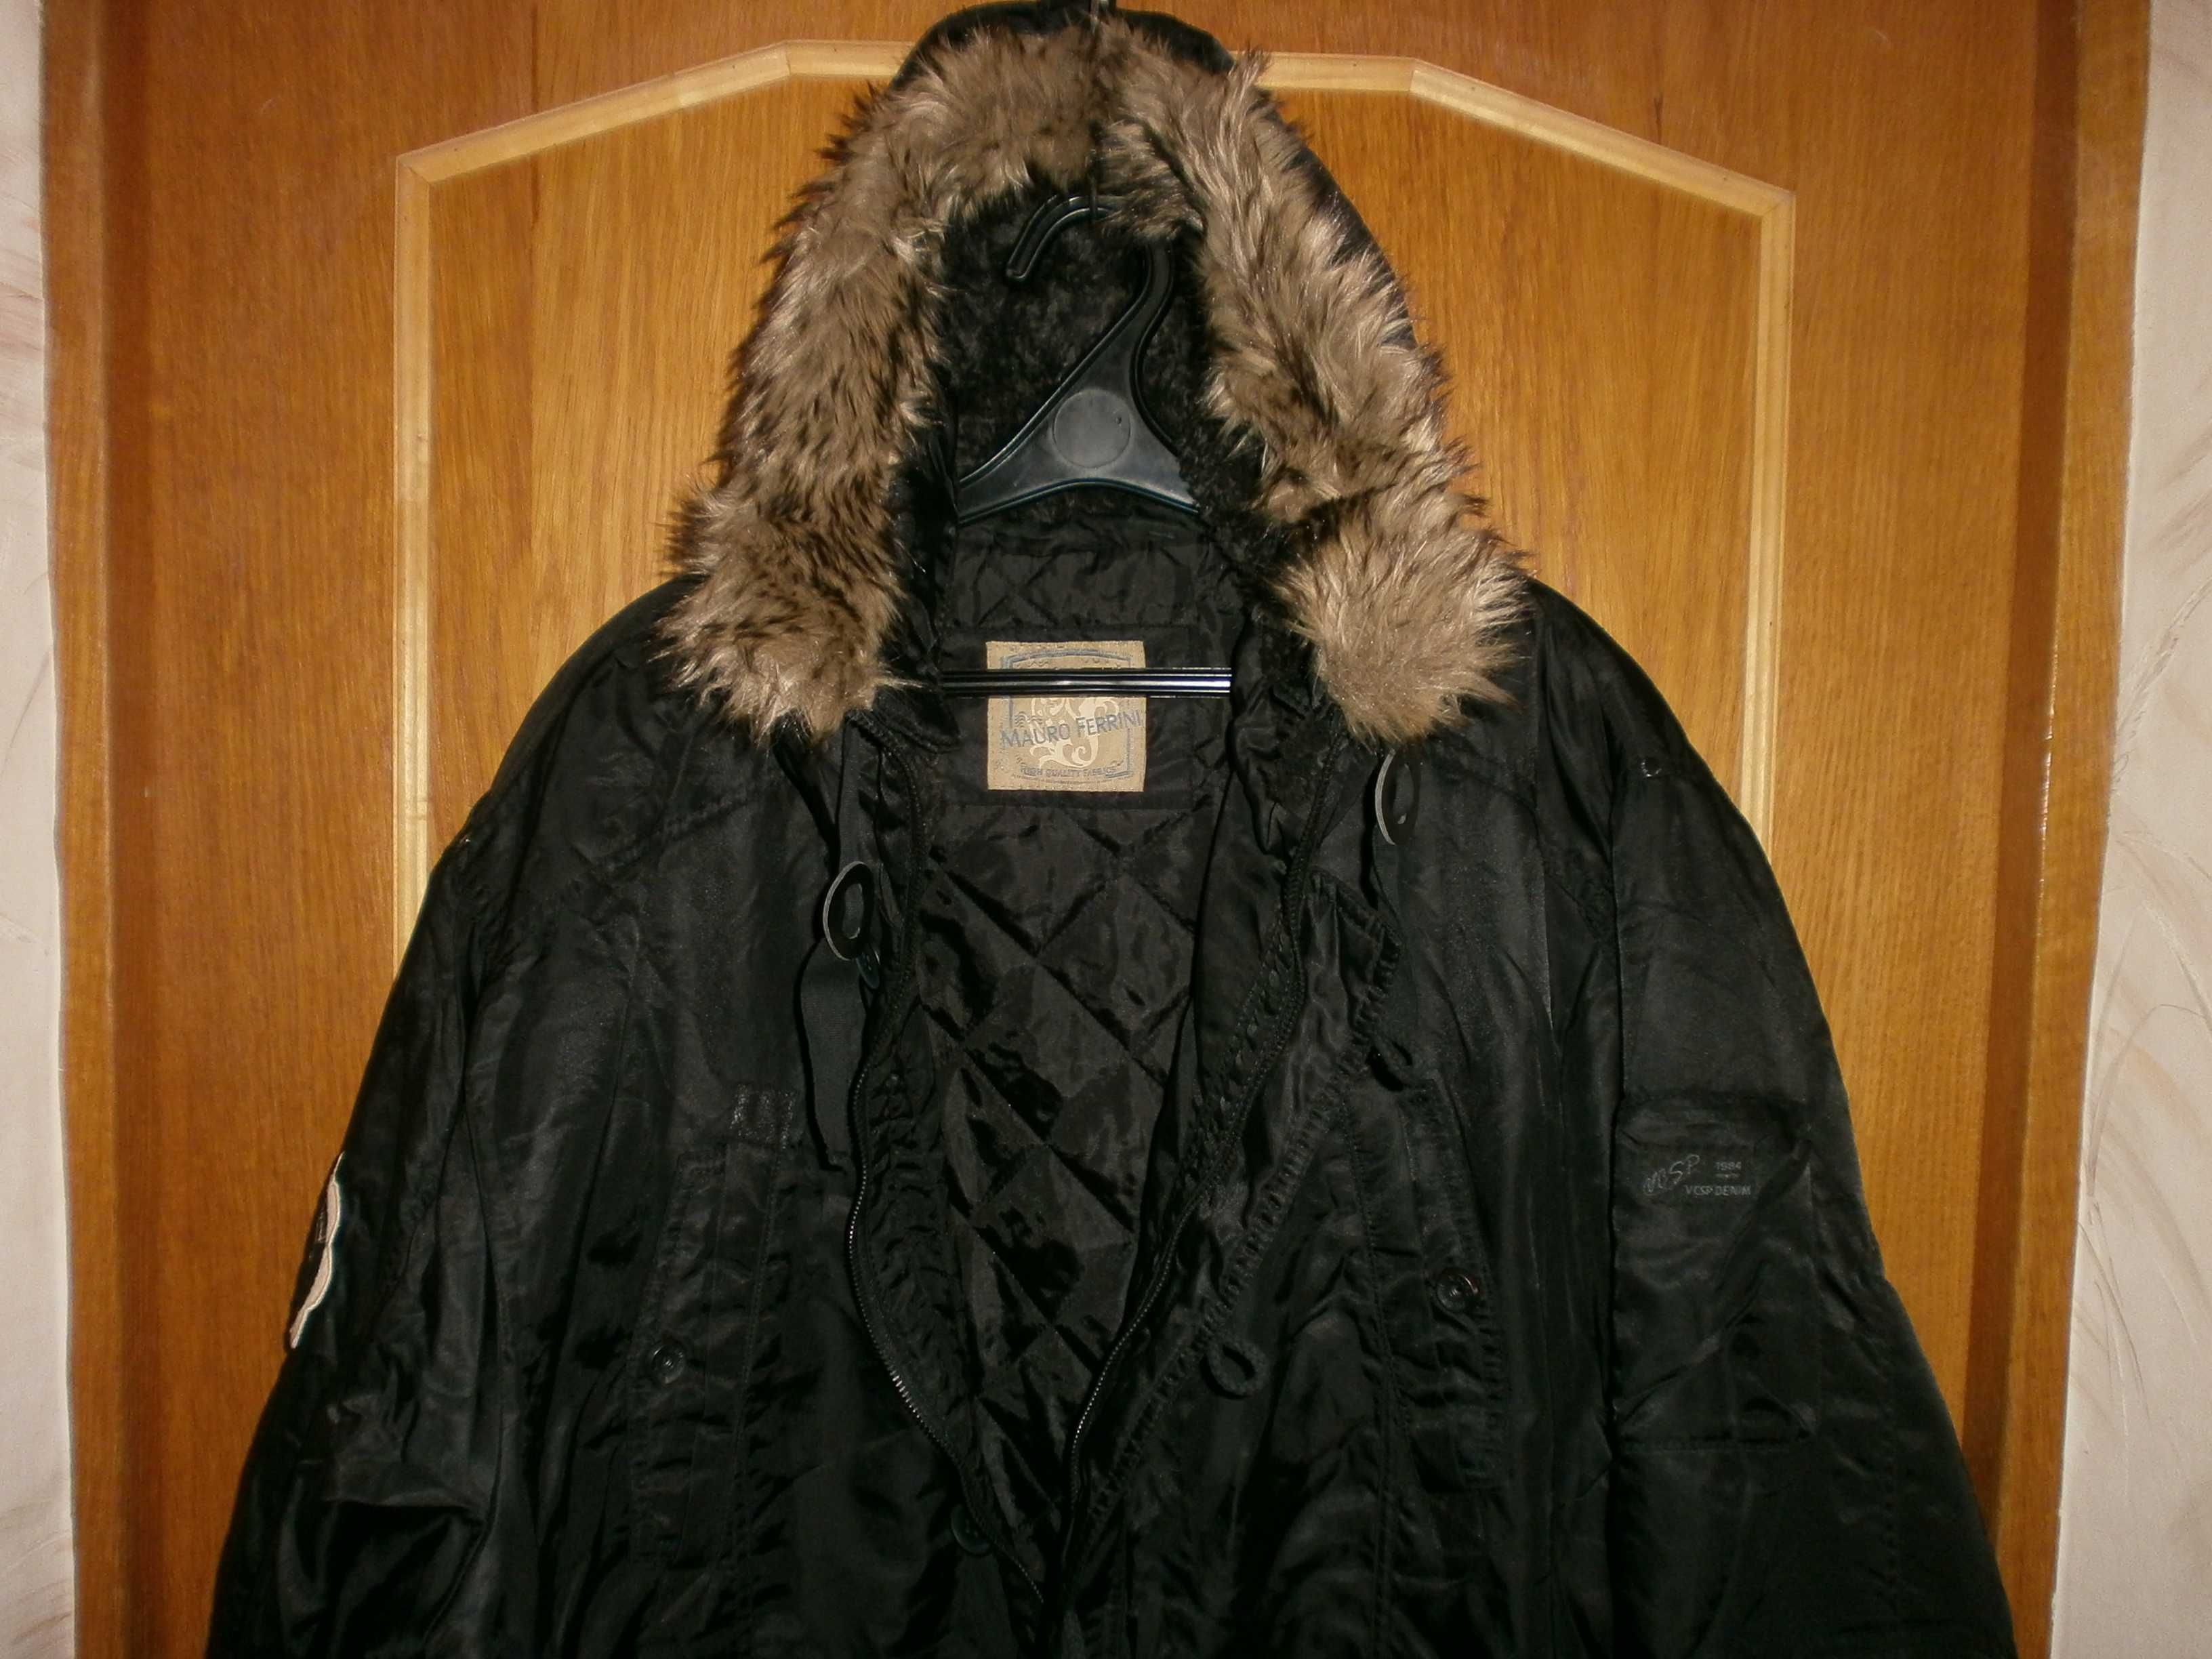 Куртка парка Puma, хаки хамелеон, разм. XL, наш 54-56. ПОГ-65 см